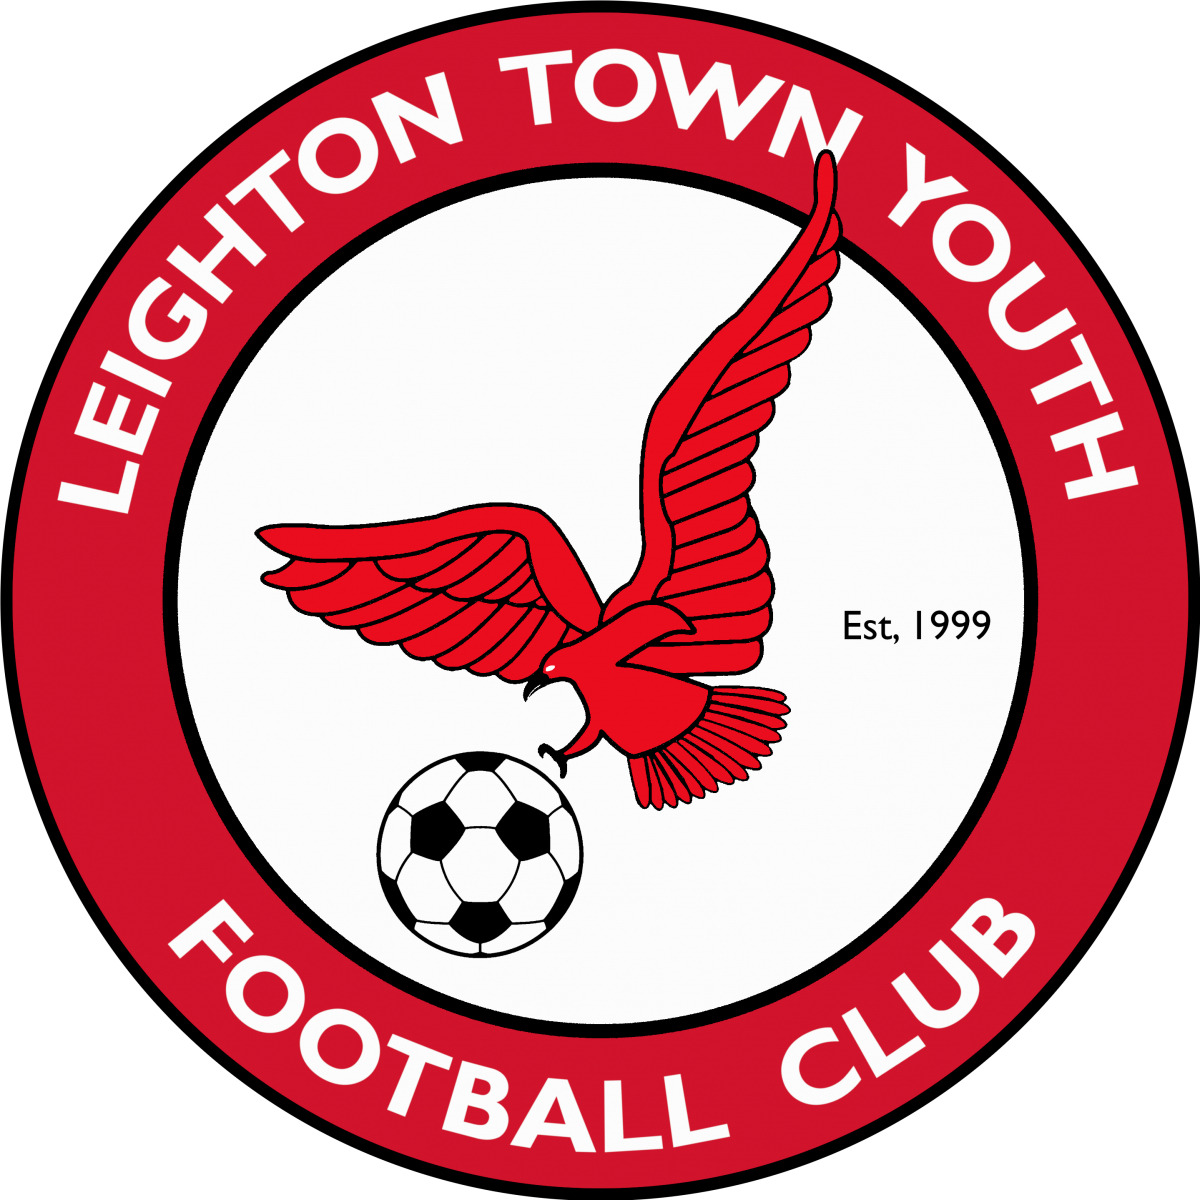 leighton-town-fc-17-football-club-facts